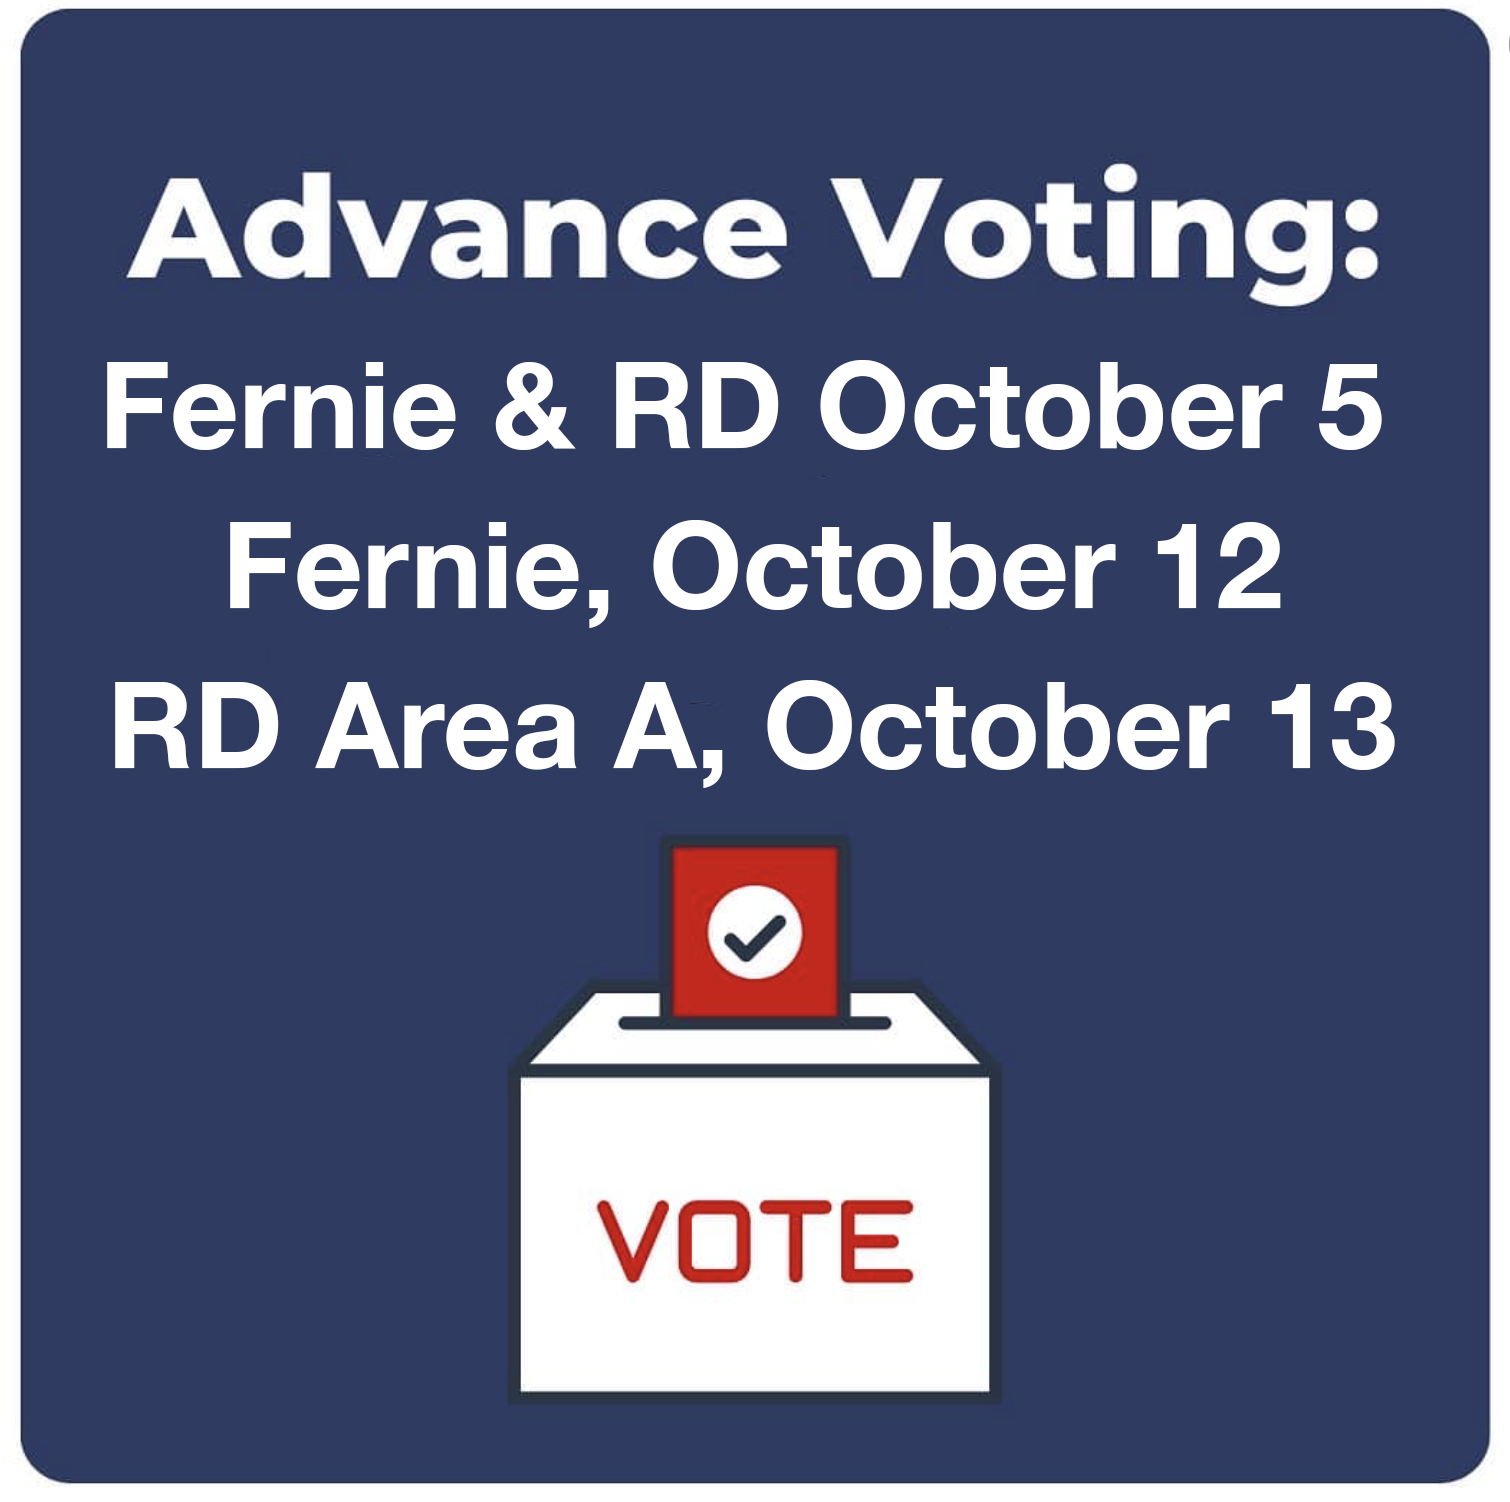 Fernie & RD Advanced Voting